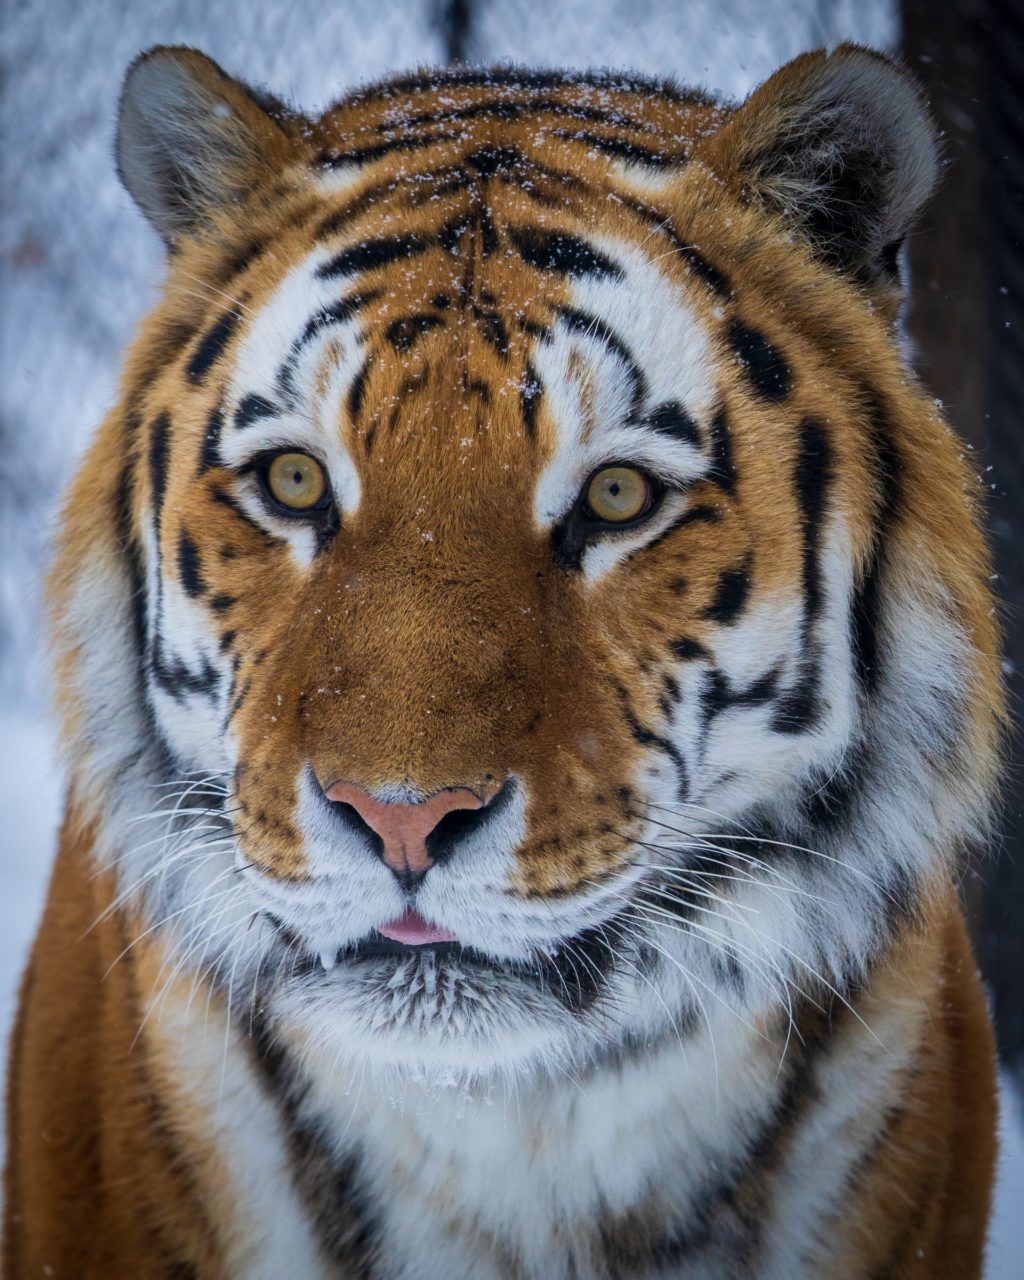 tiger in snow portrait